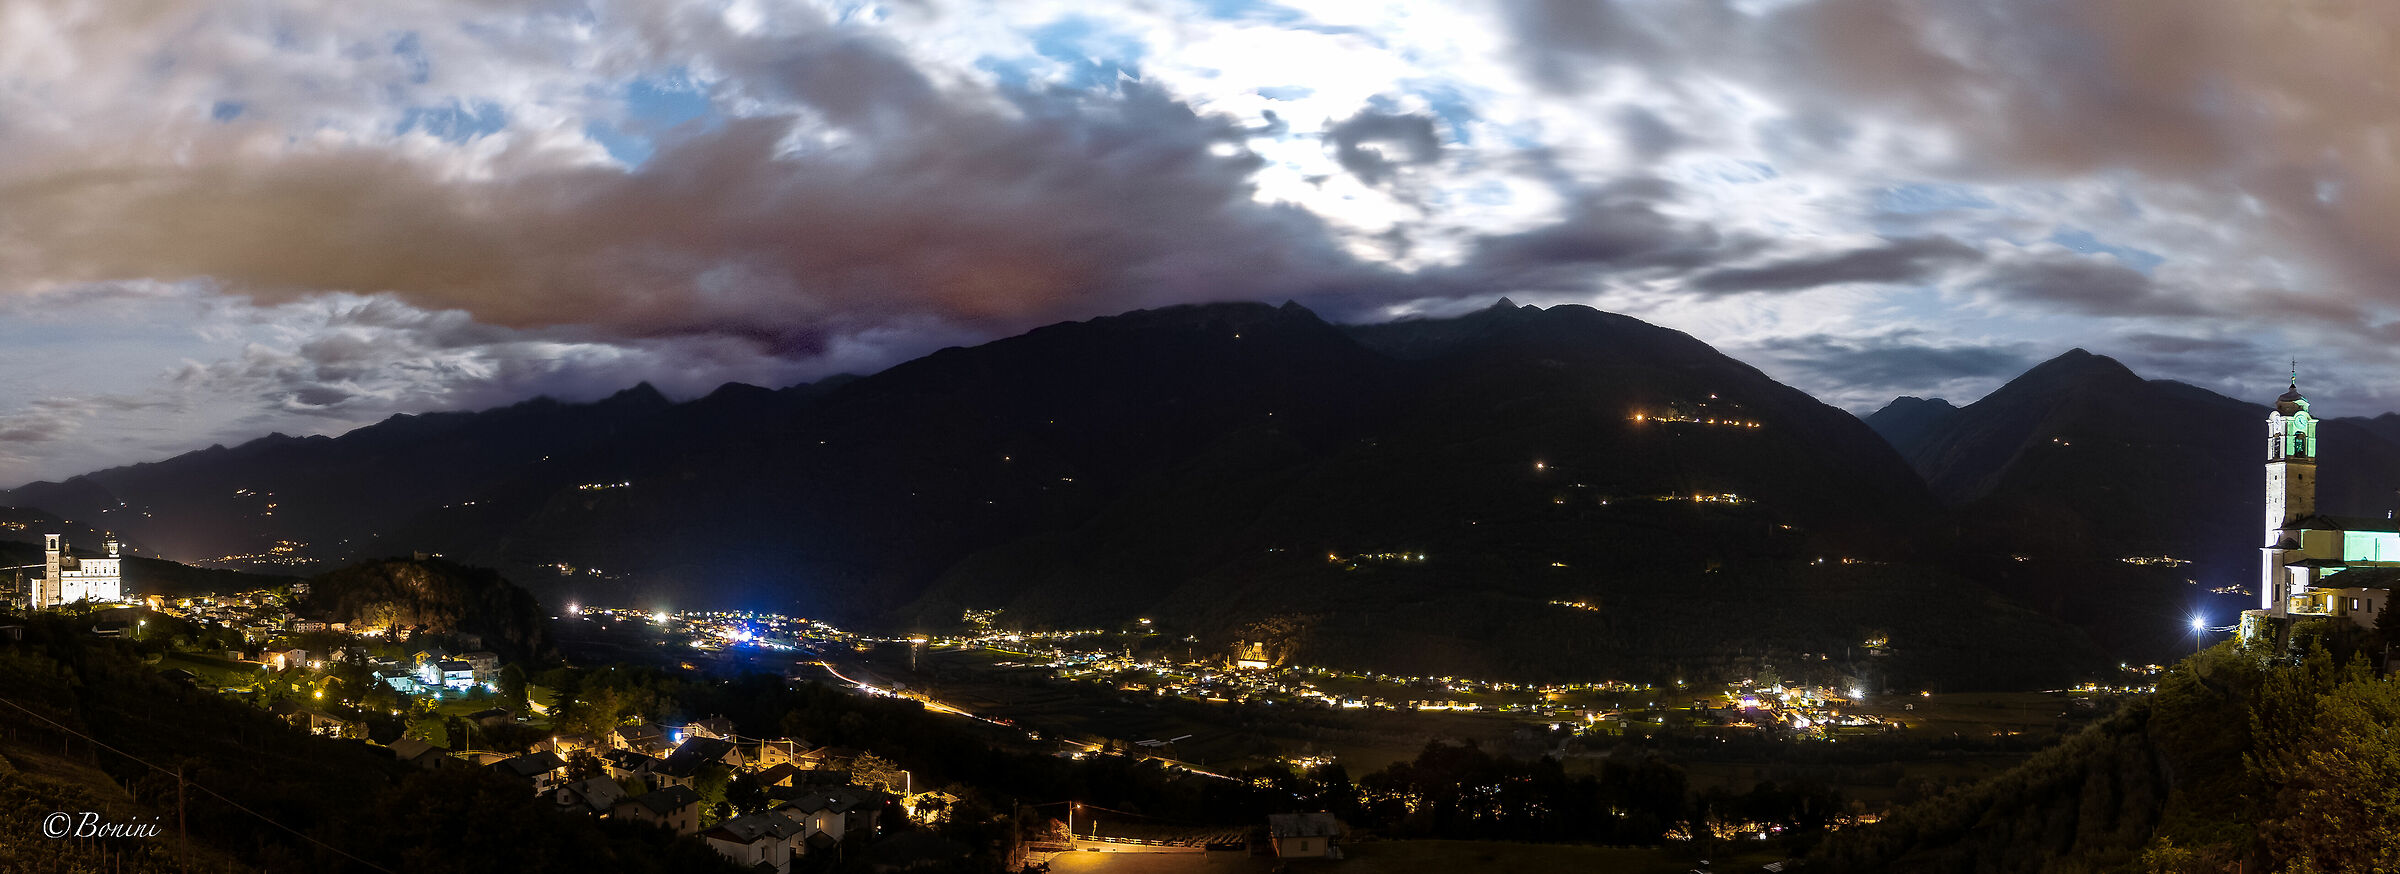 martedi notte in Valtellina...